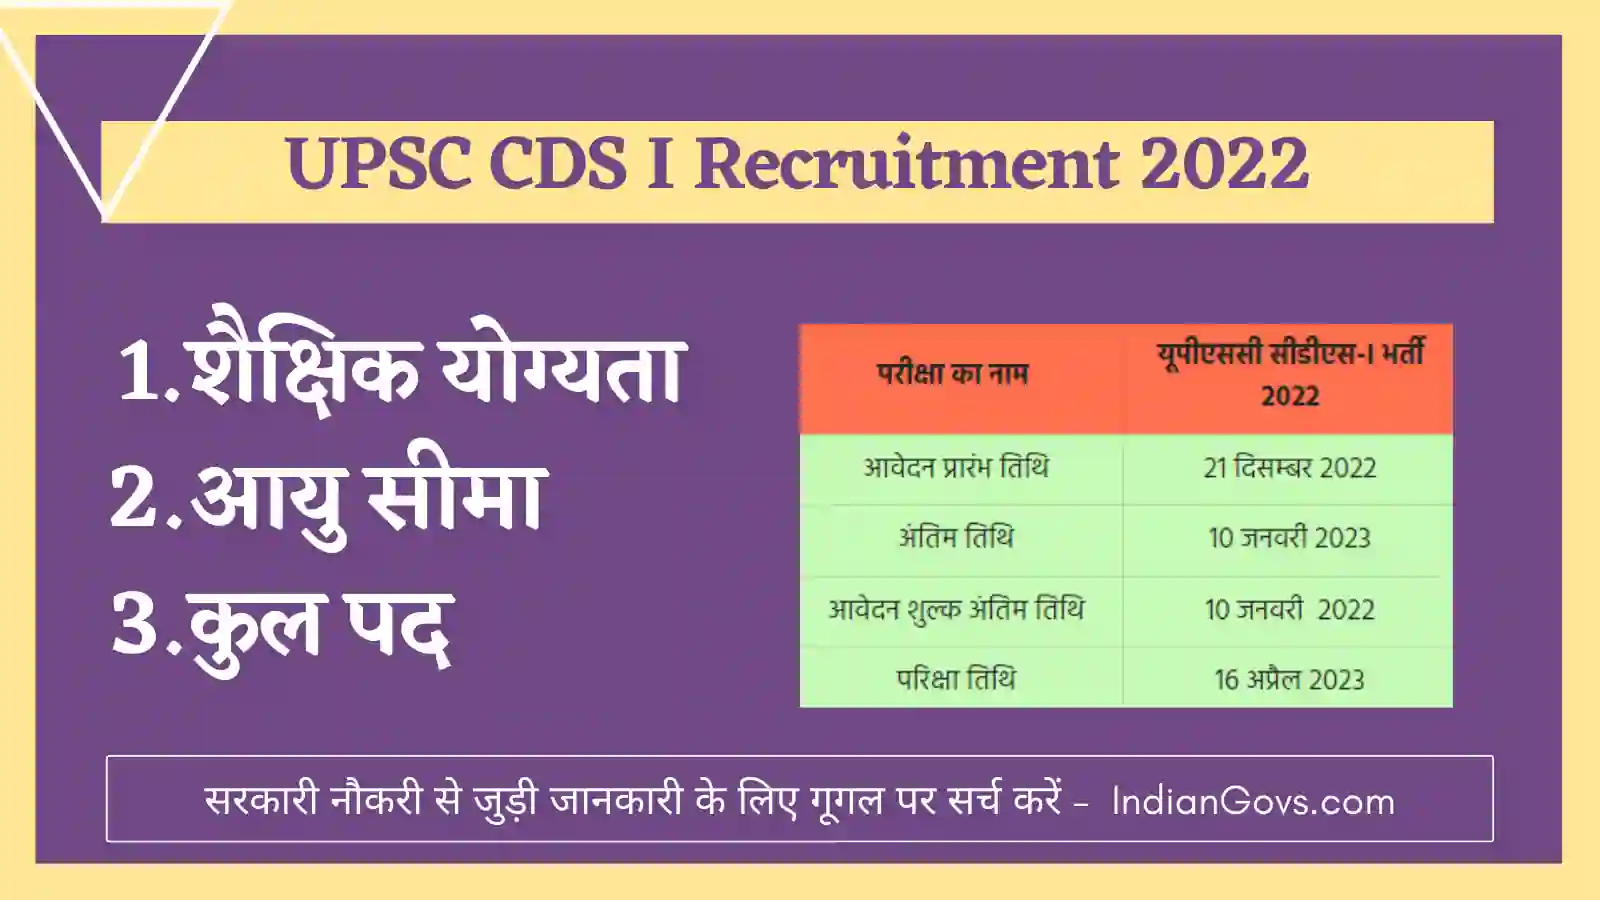 UPSC CDS I Recruitment 2022 in Hindi